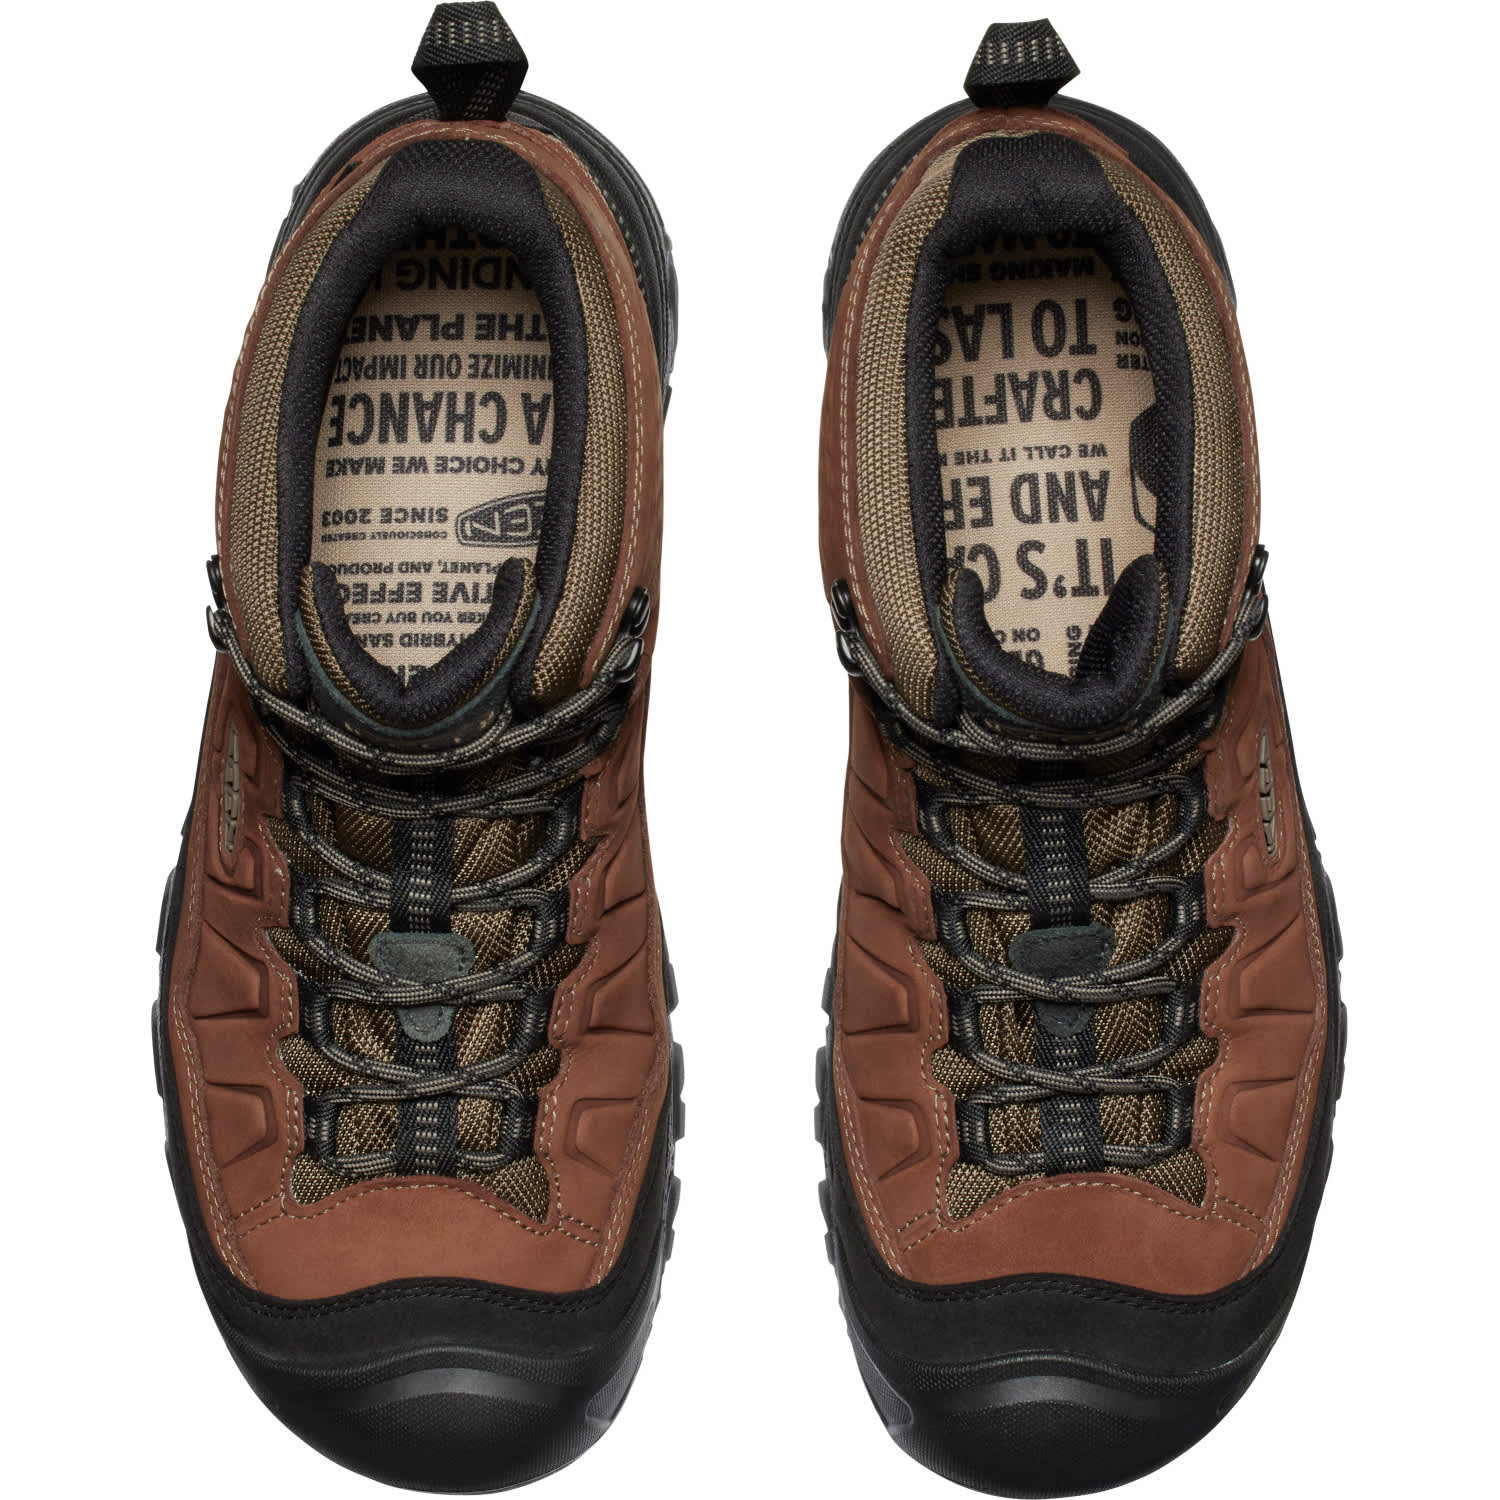 KEEN® Men’s Targhee IV Mid Waterproof Hiking Boots